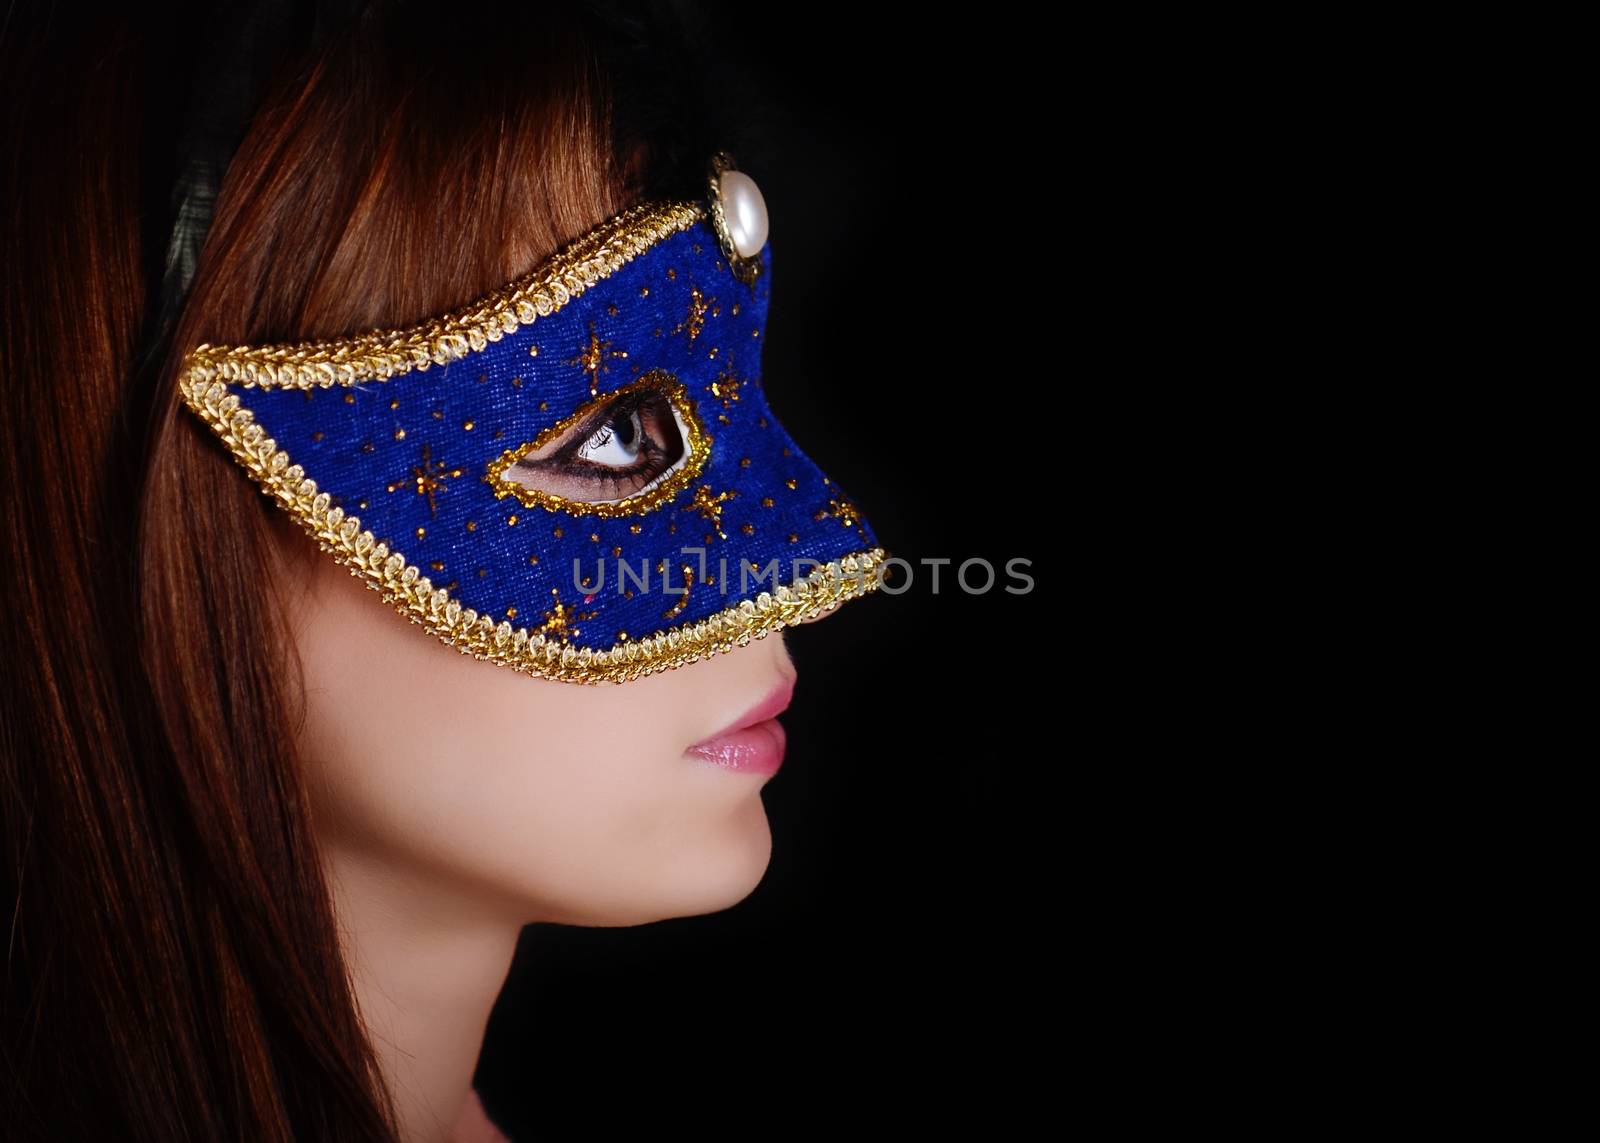 Beautiful caucasian brunette in carnival mask over black background